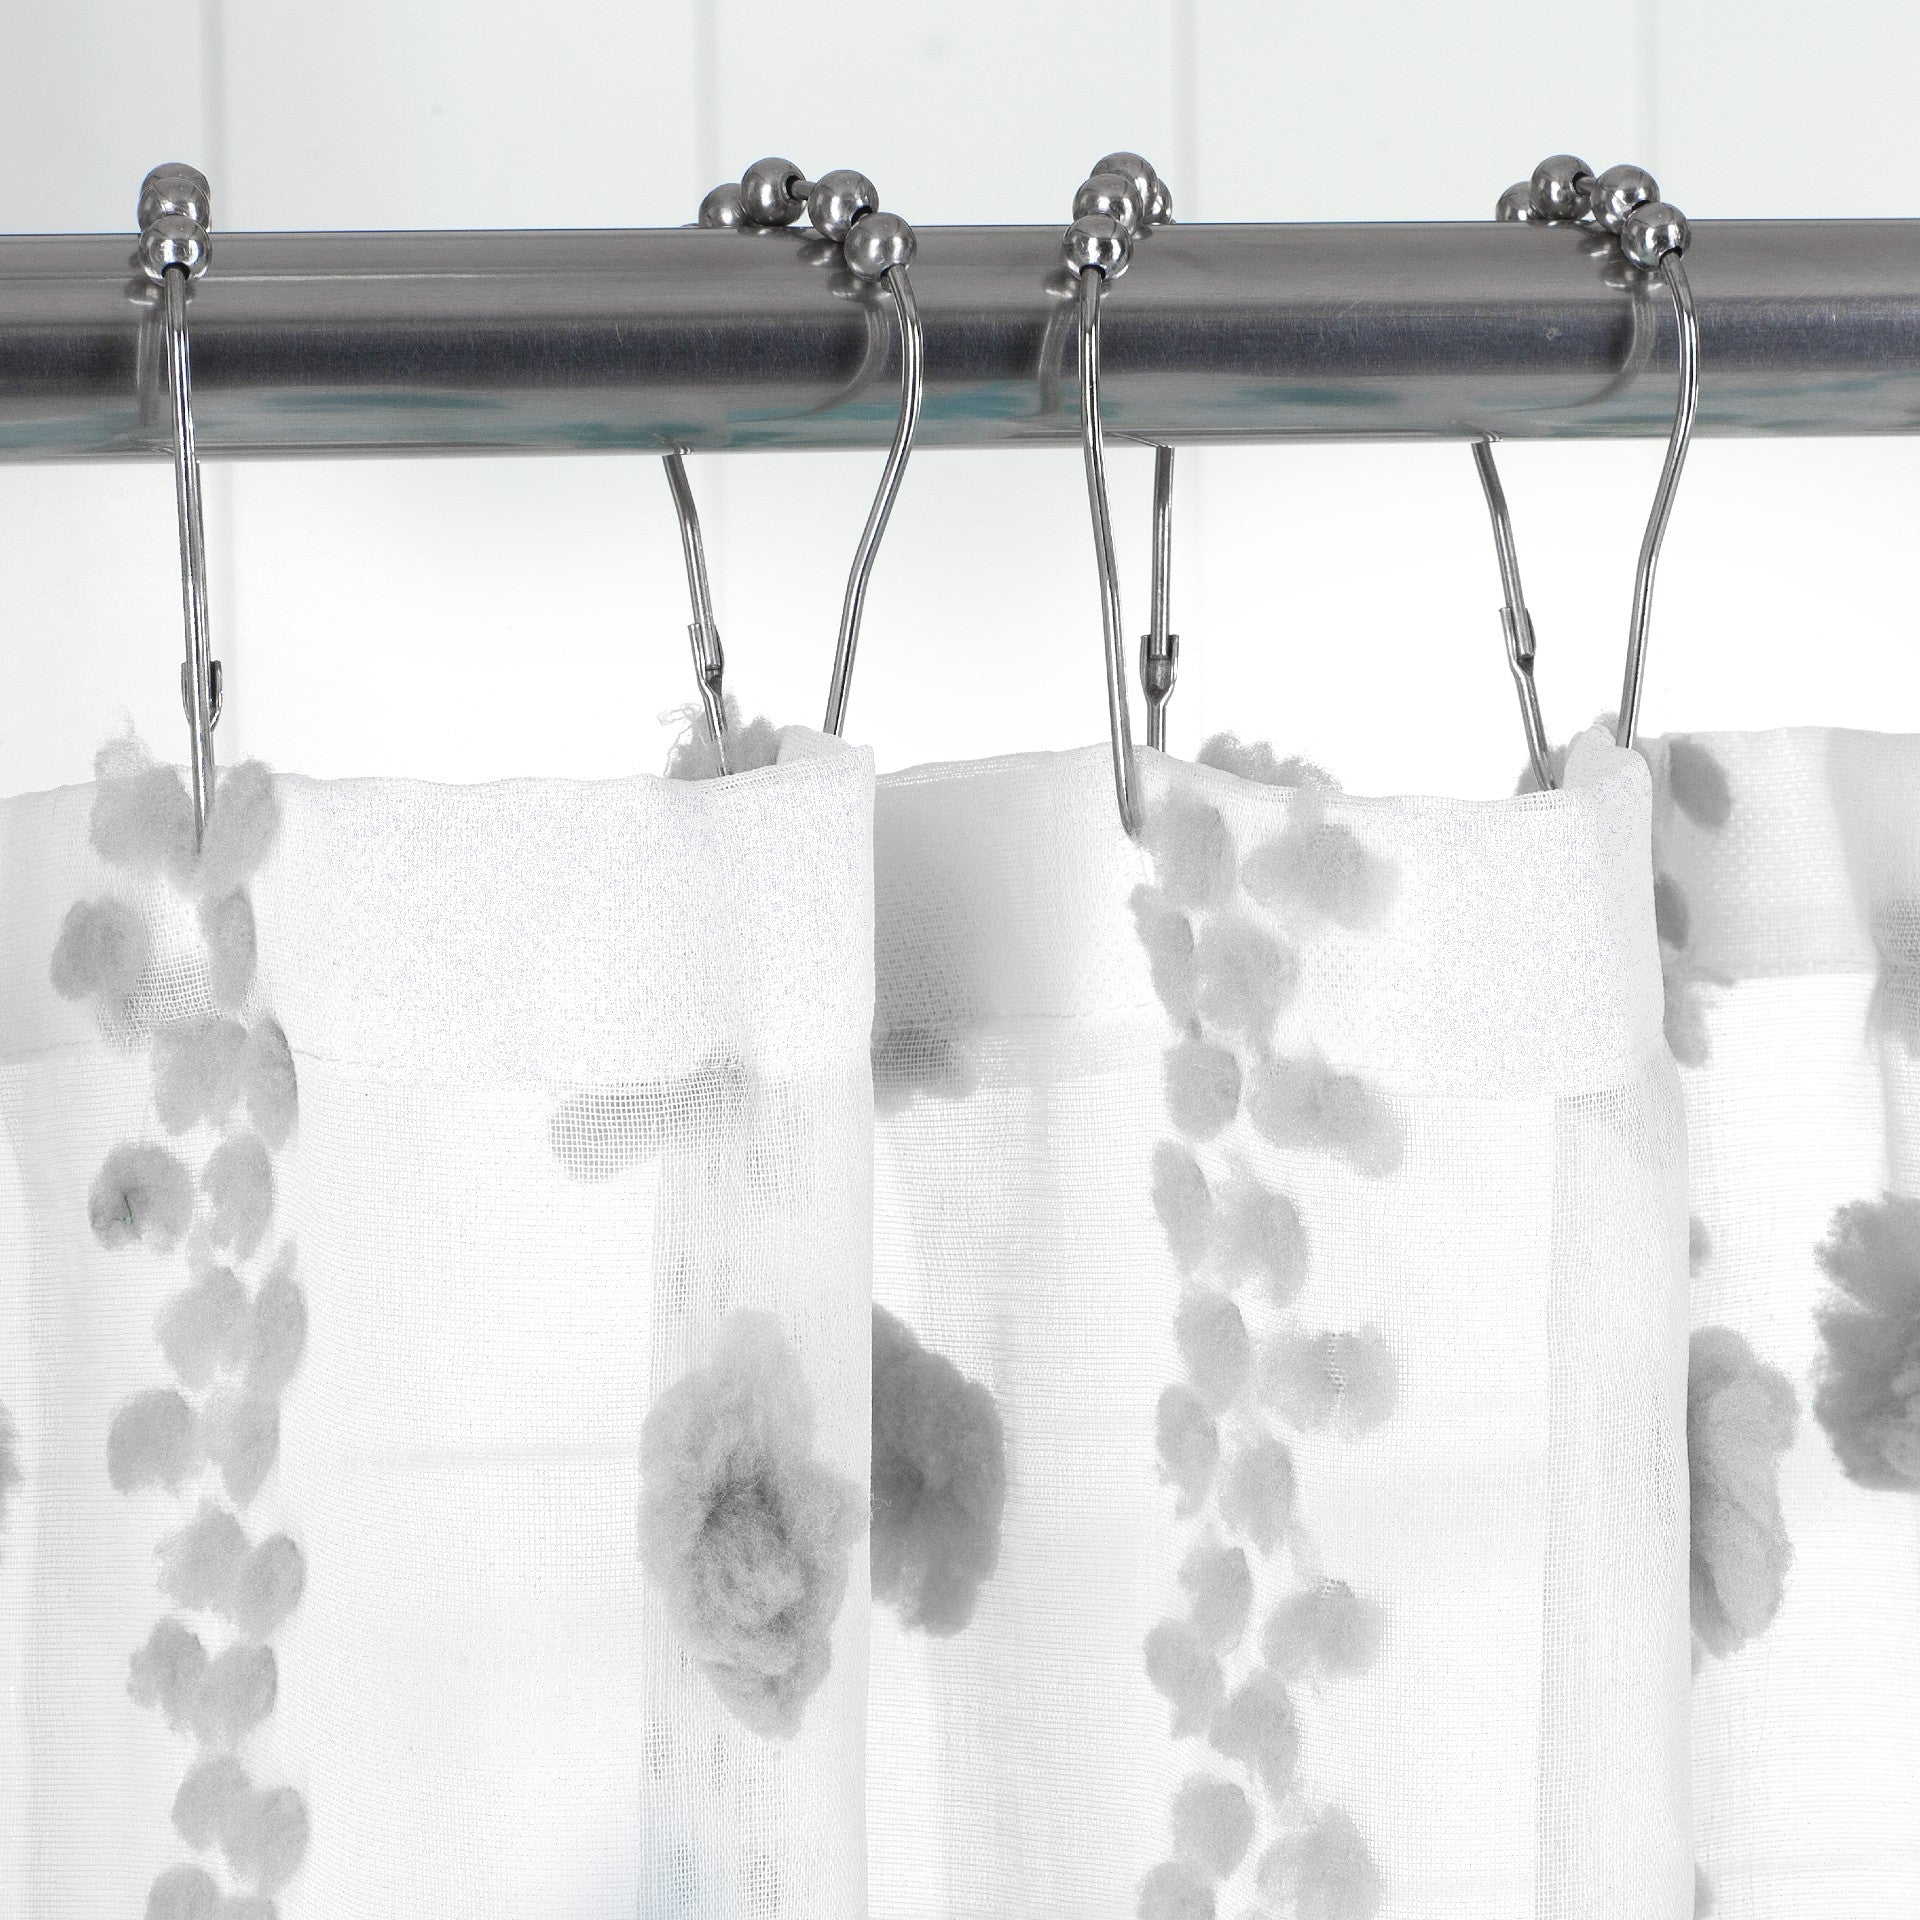 Dainty Home Cloud Modern 3D Linen-Look Fabric Shower Curtain With 3D Cotton Like Puffs